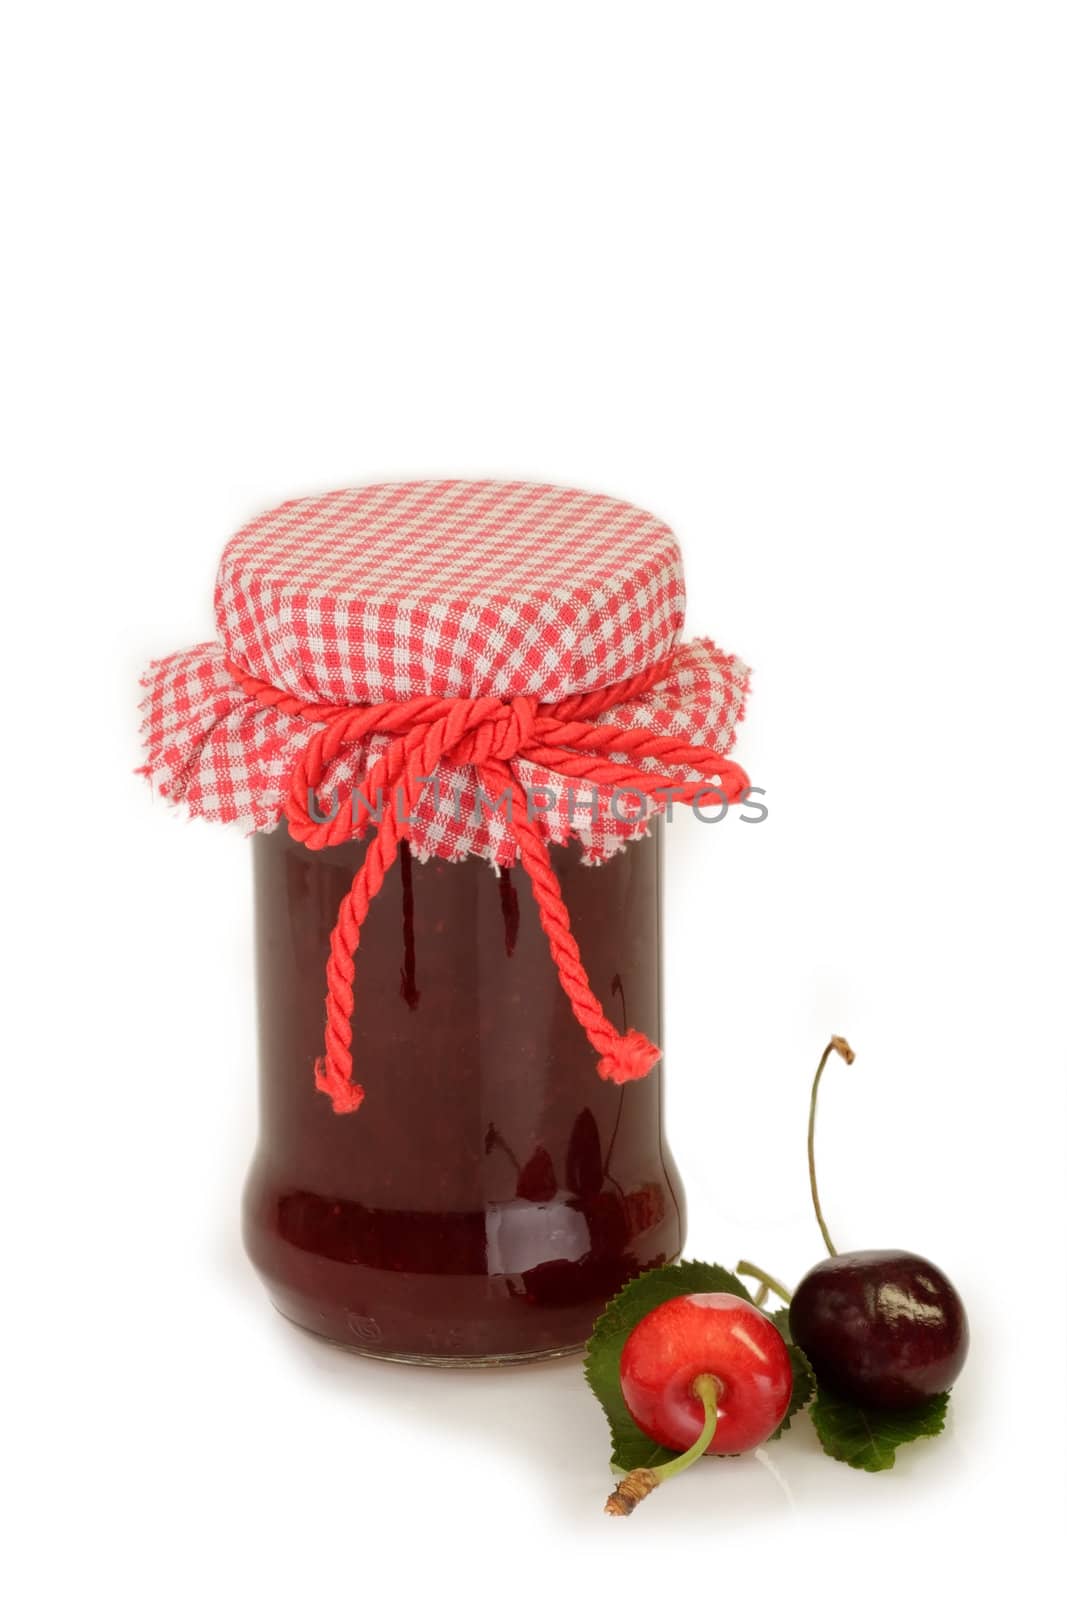 Cherry jam with fresh cherries on bright background